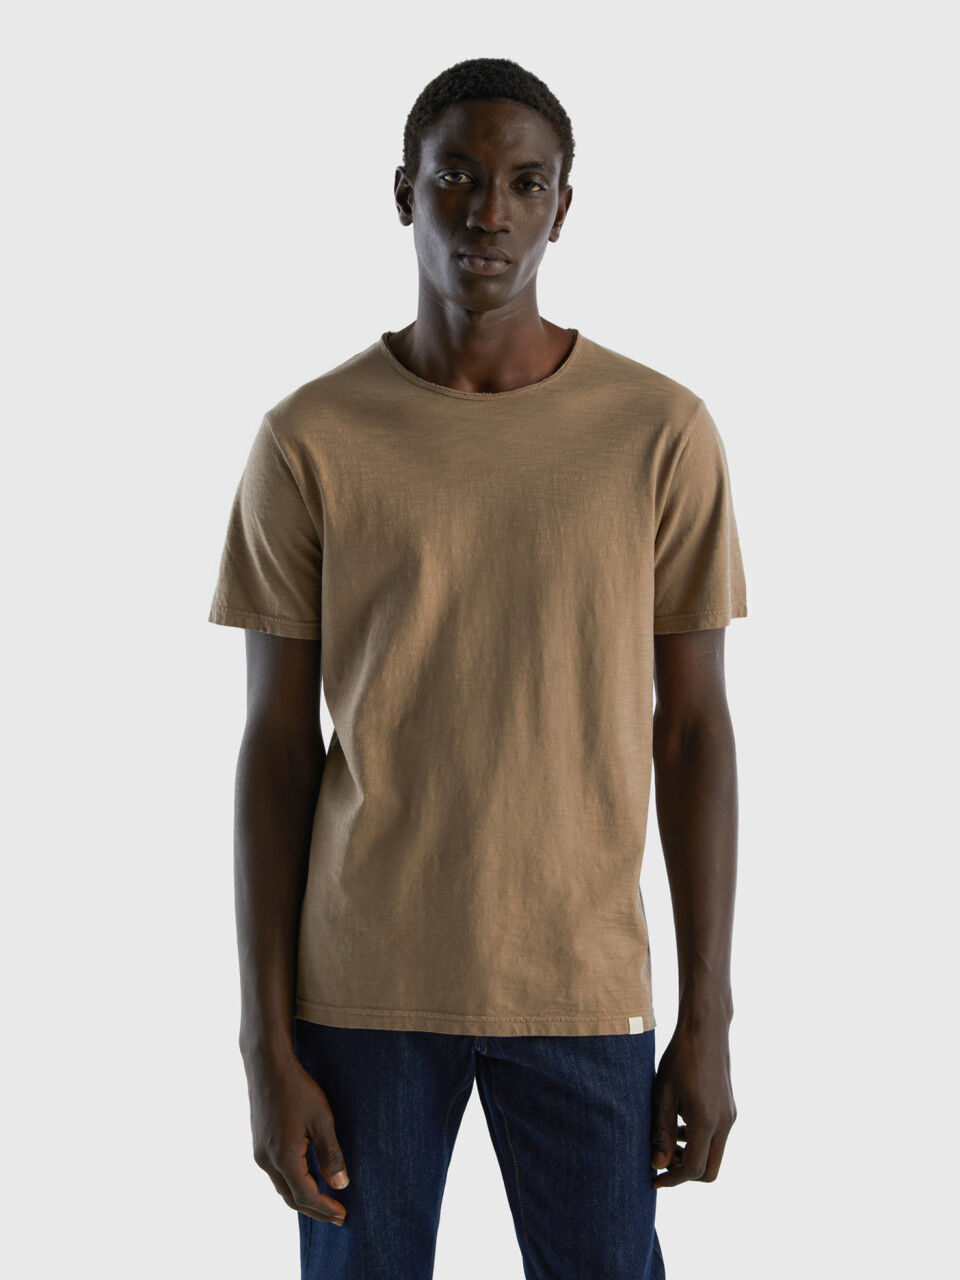 Camiseta gris ceniza de algodón flameado